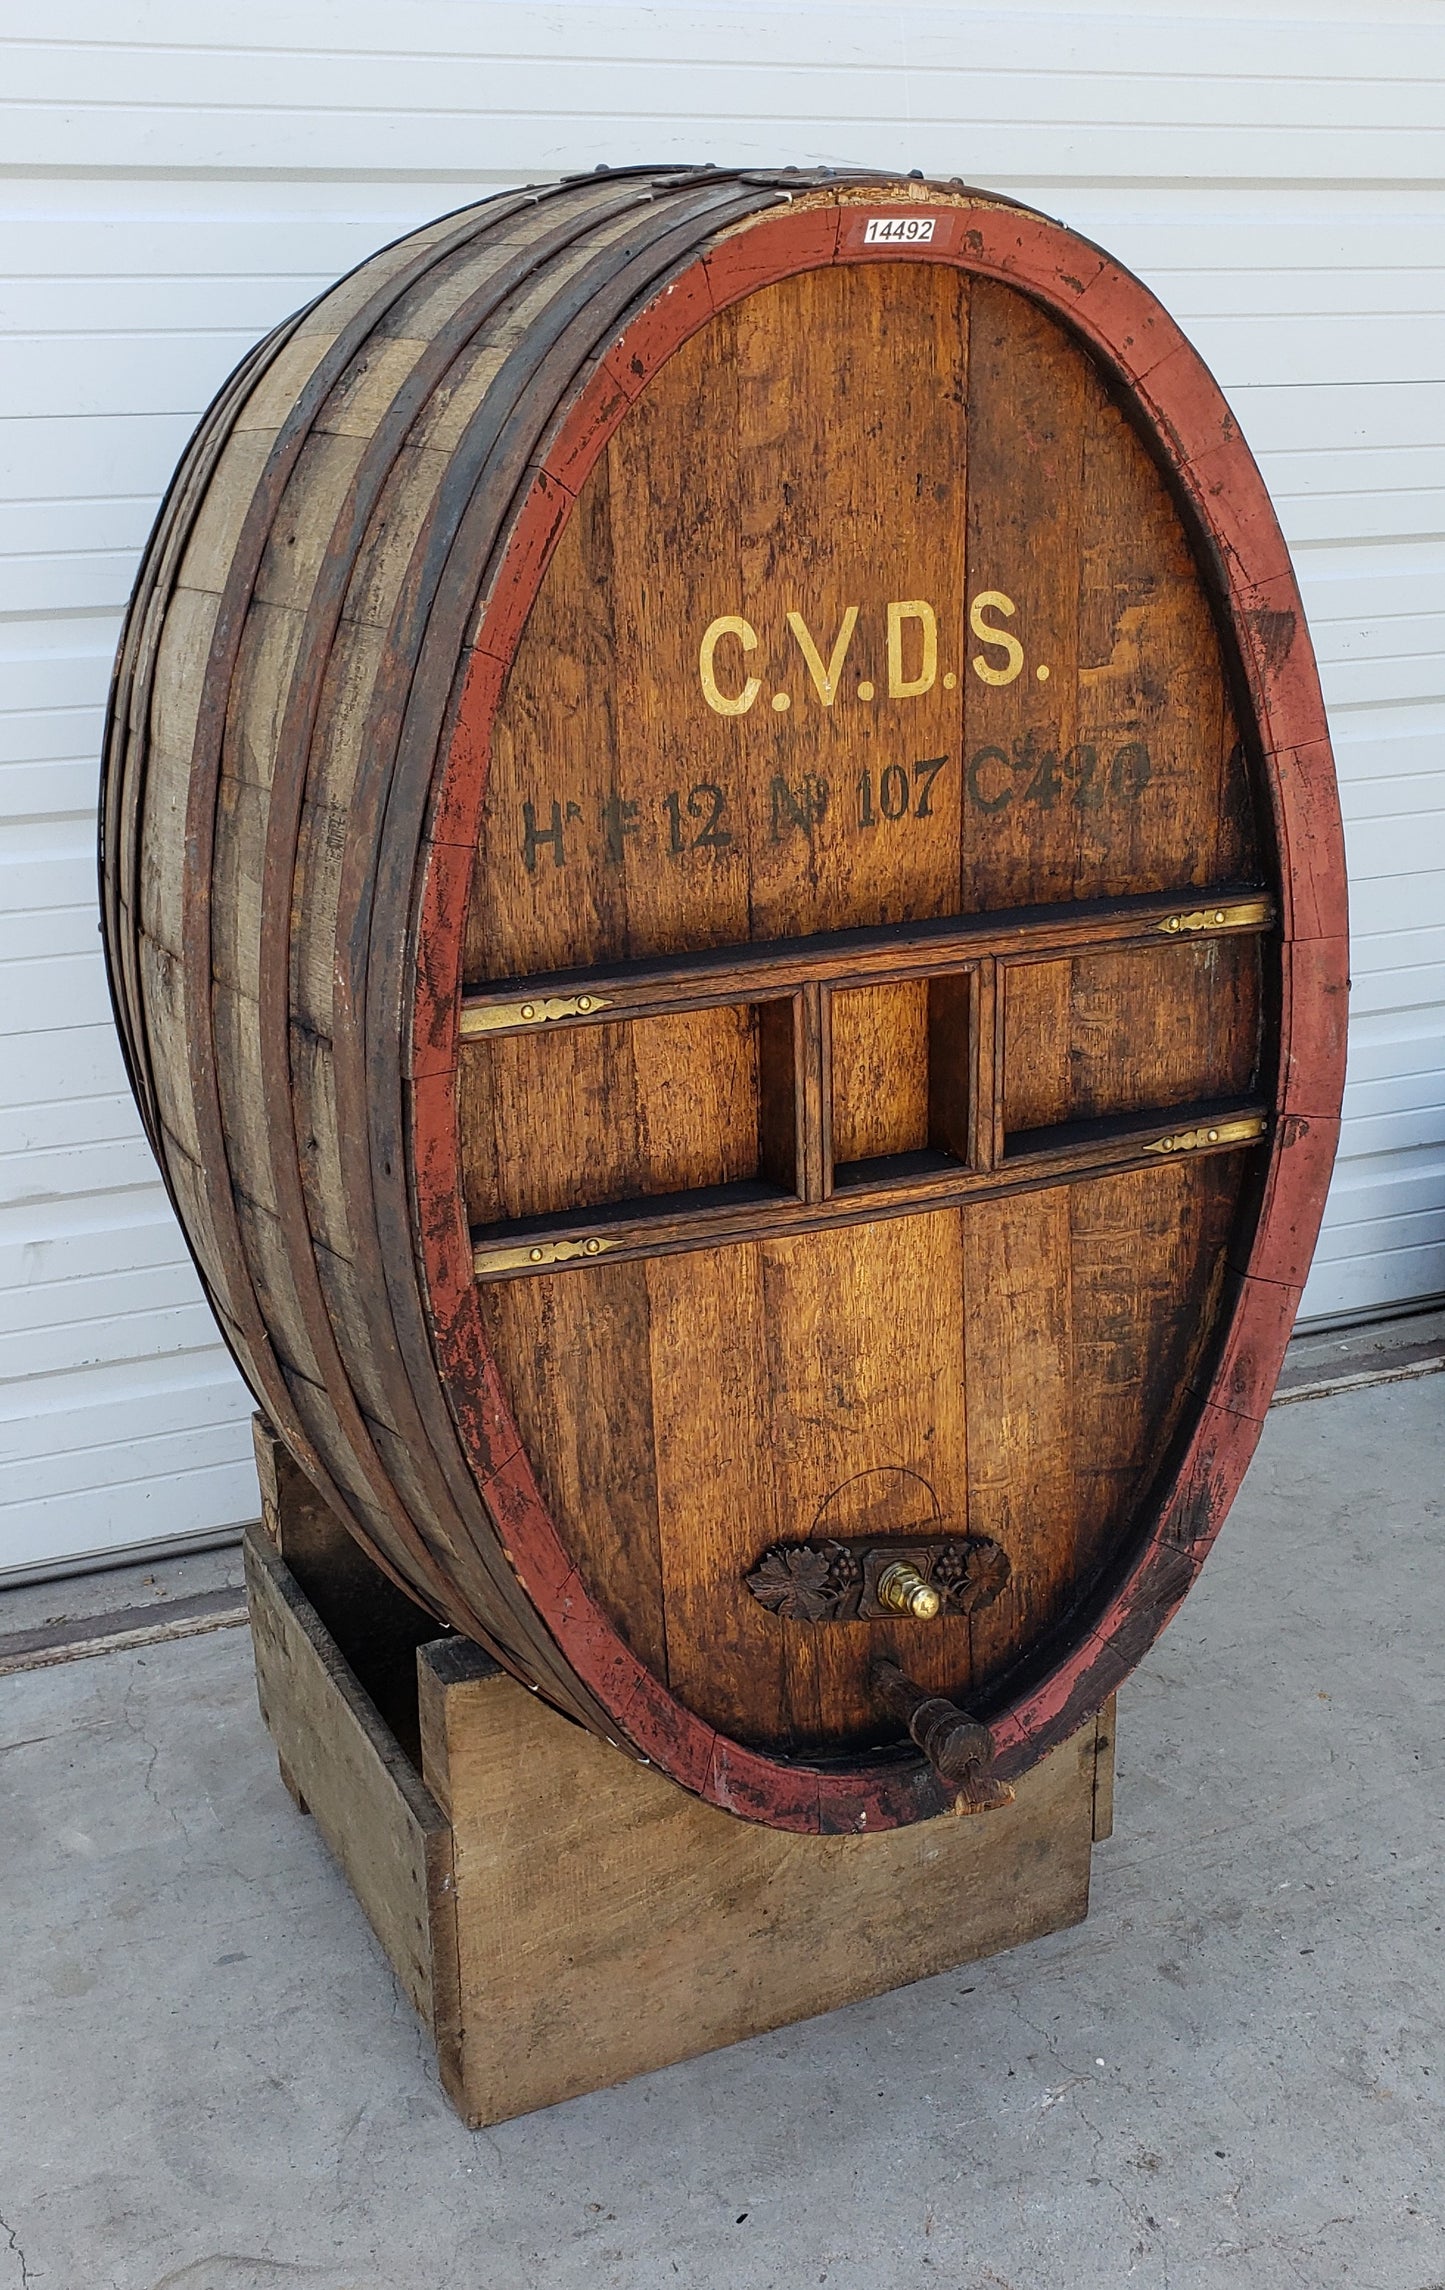 French Cognac Barrel "C.V.D.S"